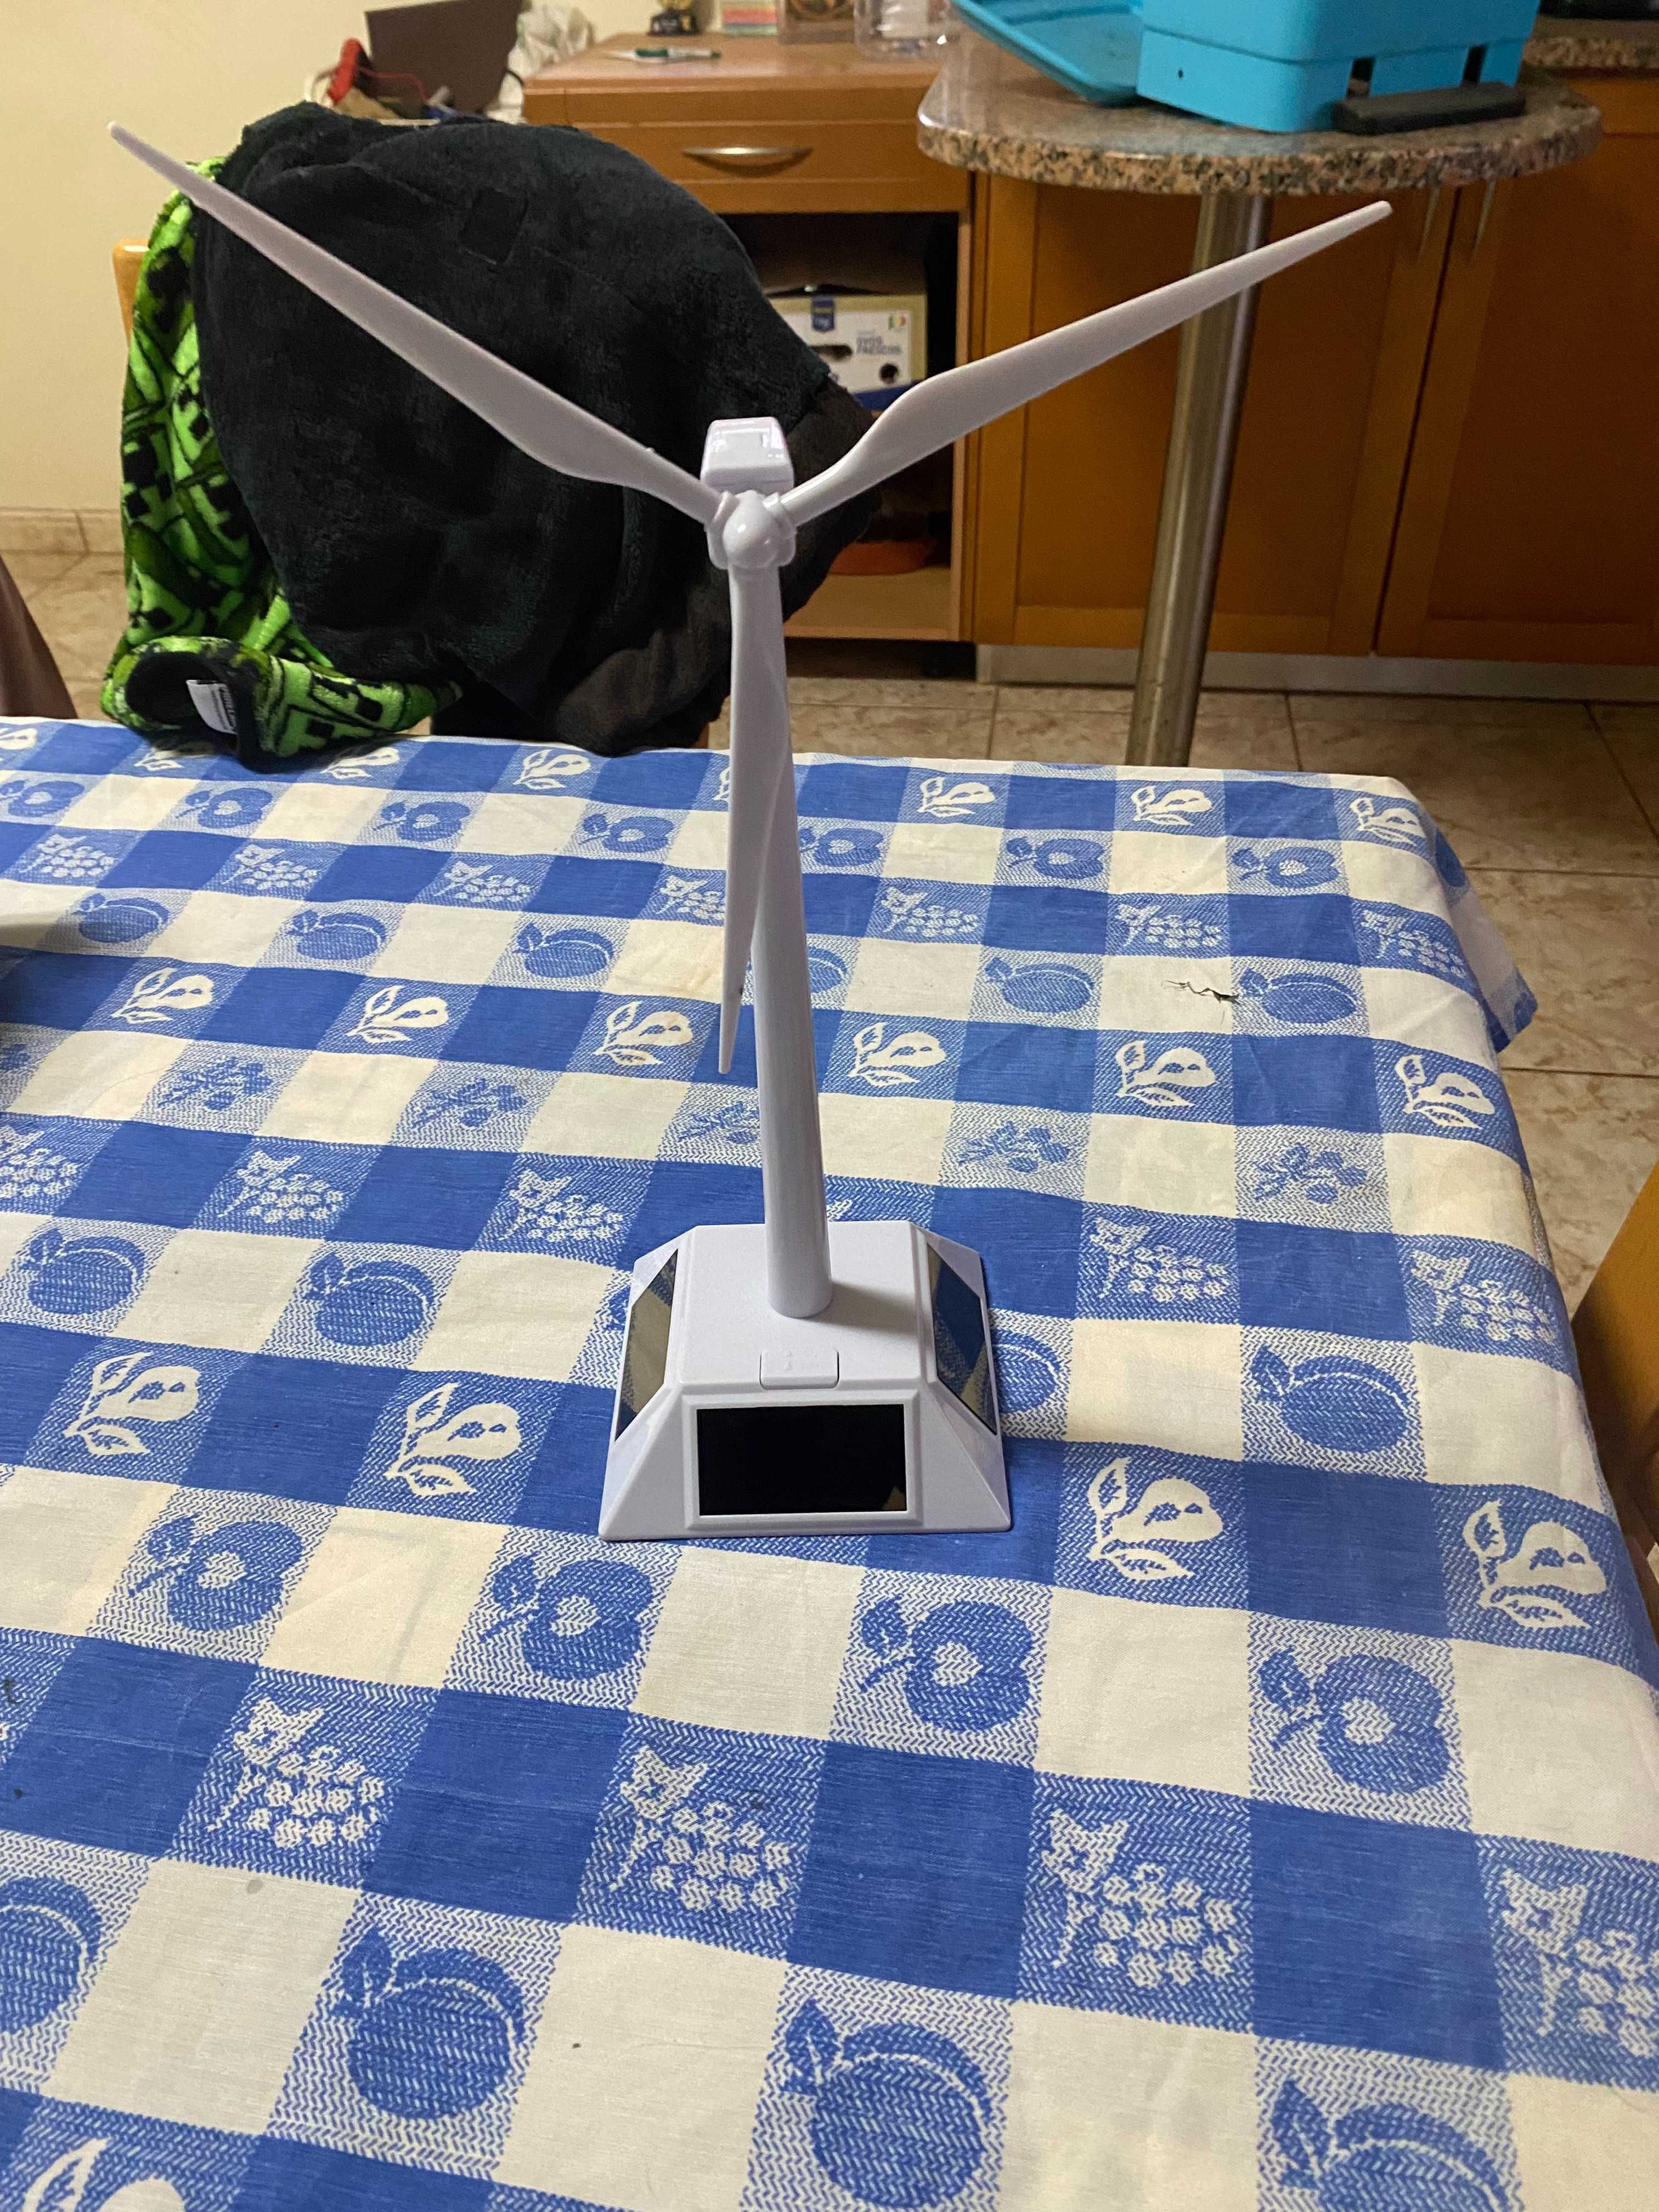 Fyearfly Mini moinho de vento de energia solar